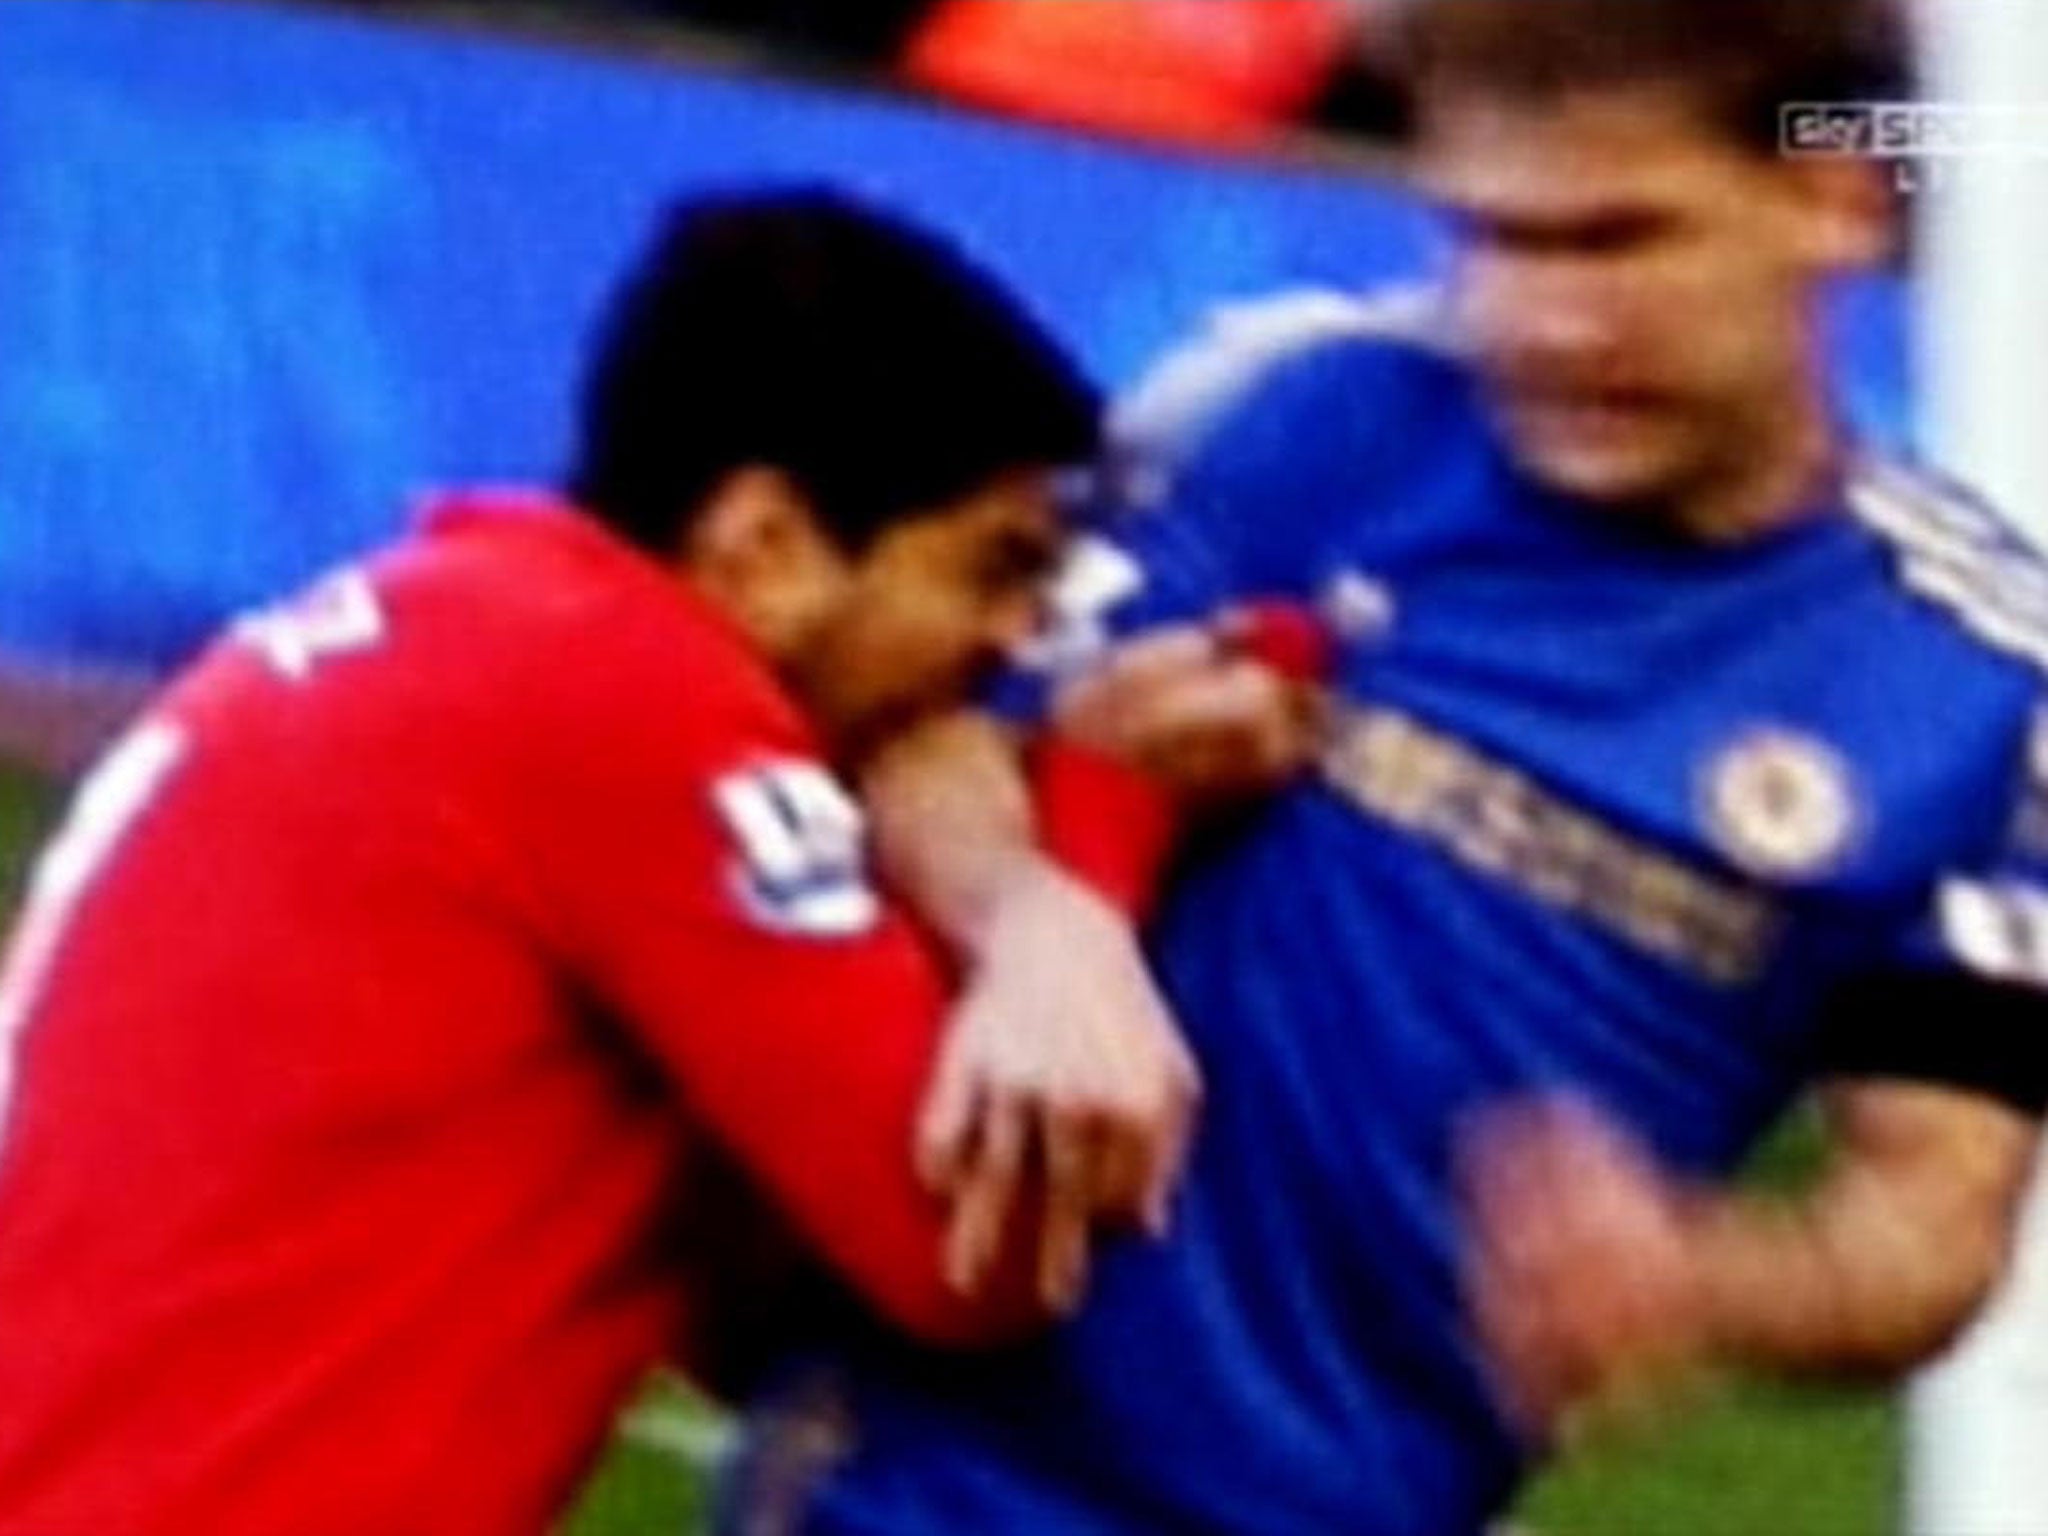 A screen grab of Luis Suarez biting Chelsea defender Branislav Ivanovic